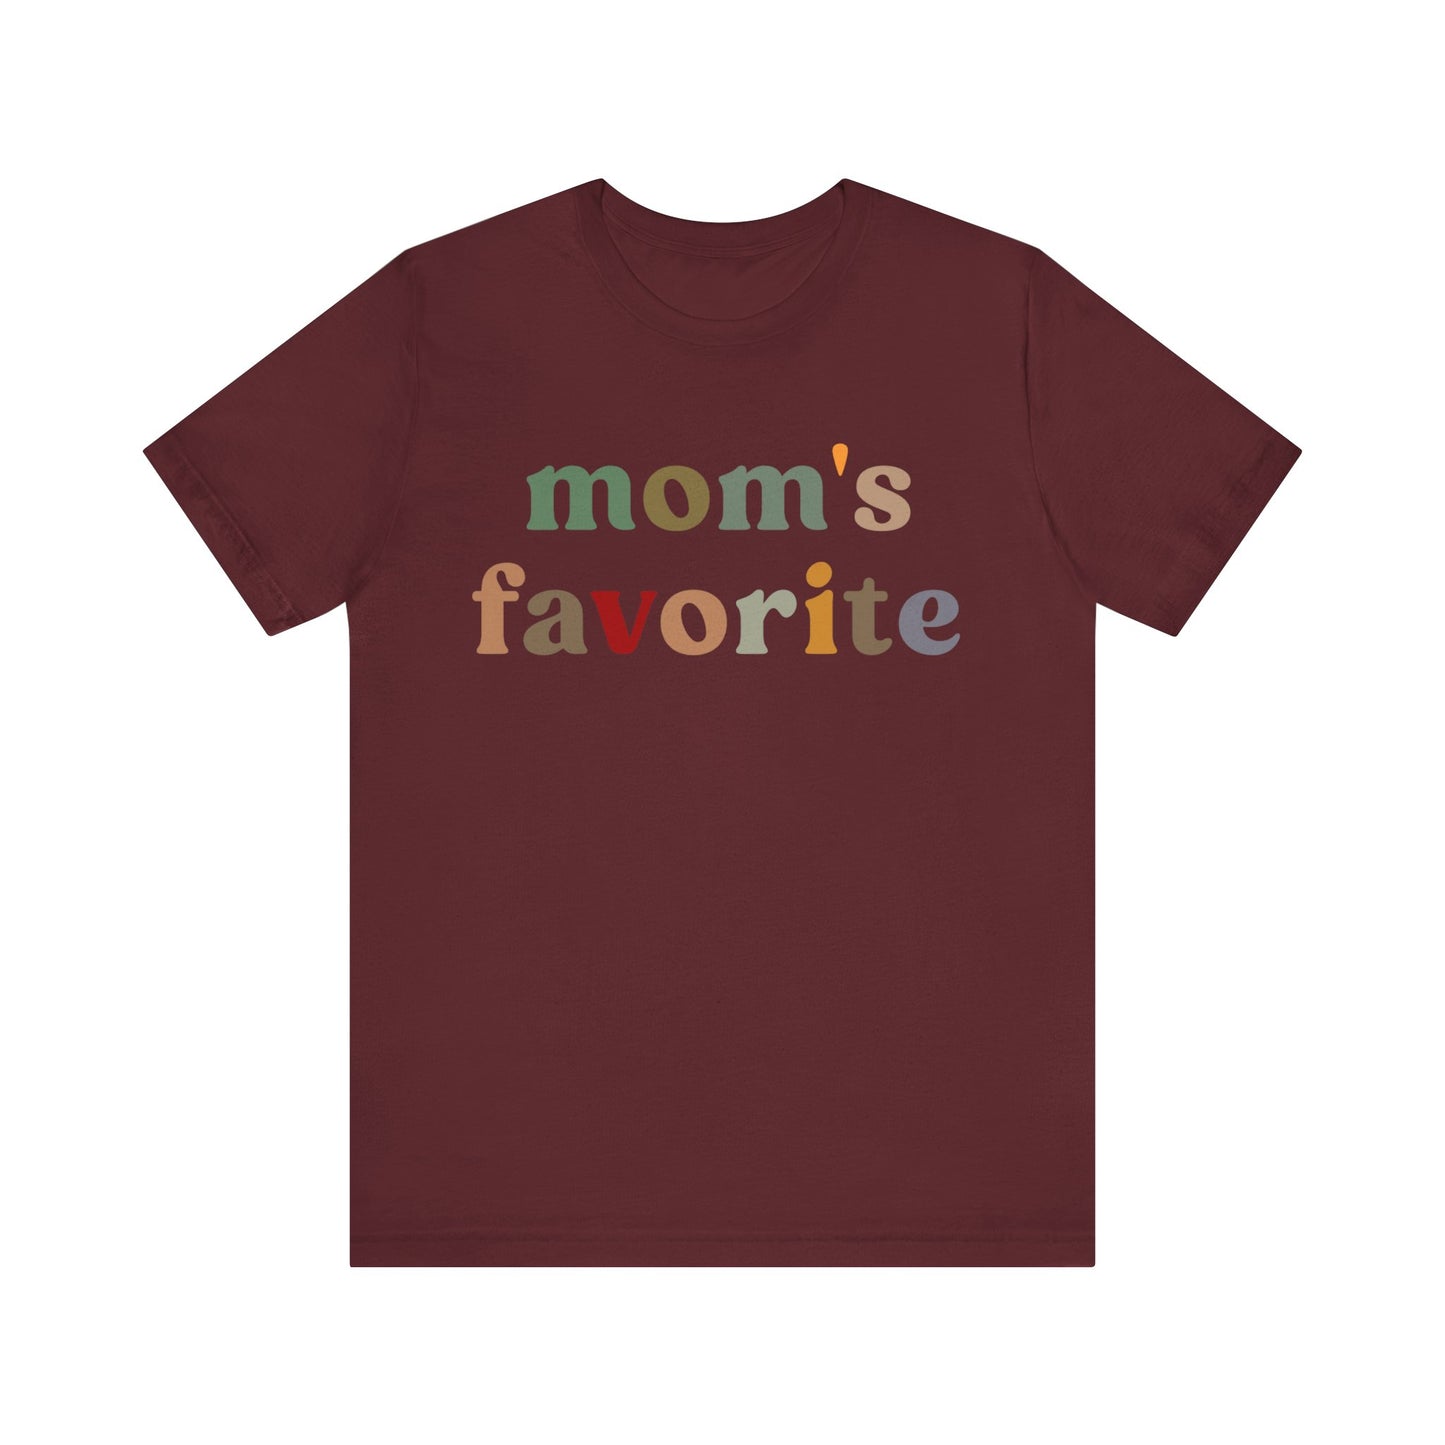 Mom's Favorite Shirt, Oldest Daughter Shirt, Youngest Daughter Shirt, Mama's Favorite Daughter Shirt, Favorite Child Shirt, T1122